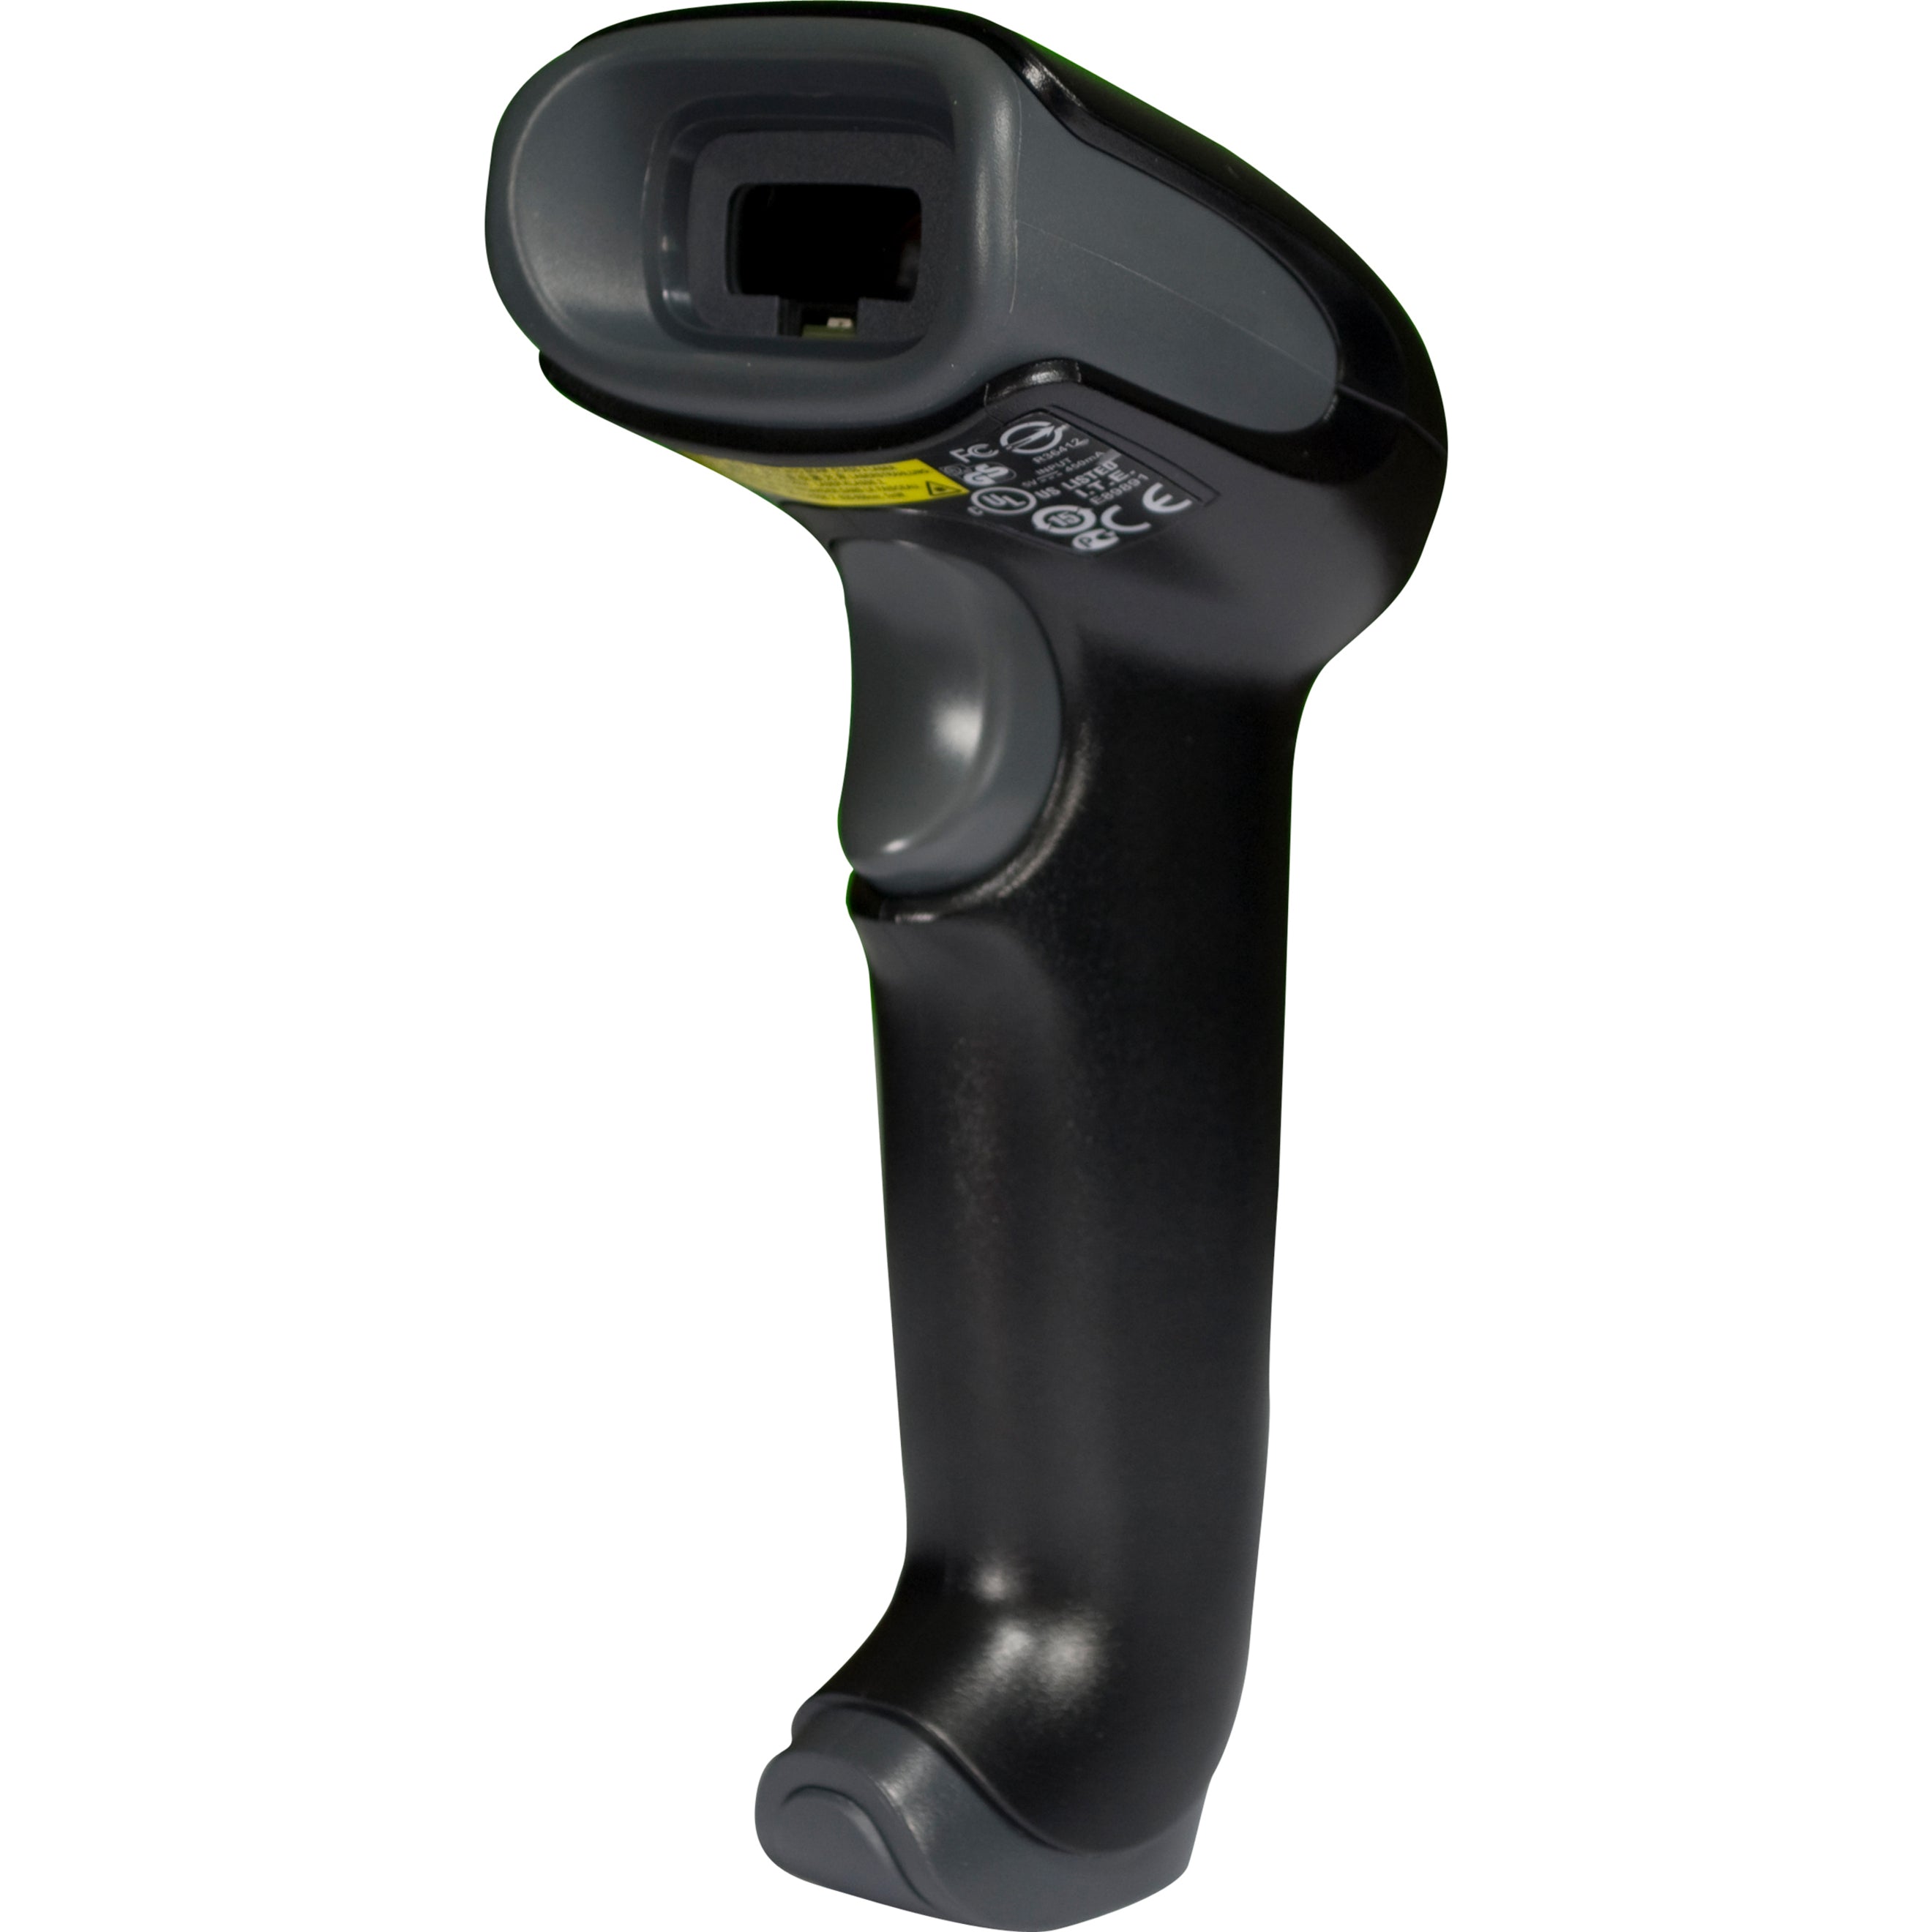 Honeywell 1250G-1 Voyager 1250g Handheld Bar Code Reader, Laser Scanner, 1D Scanning Capability